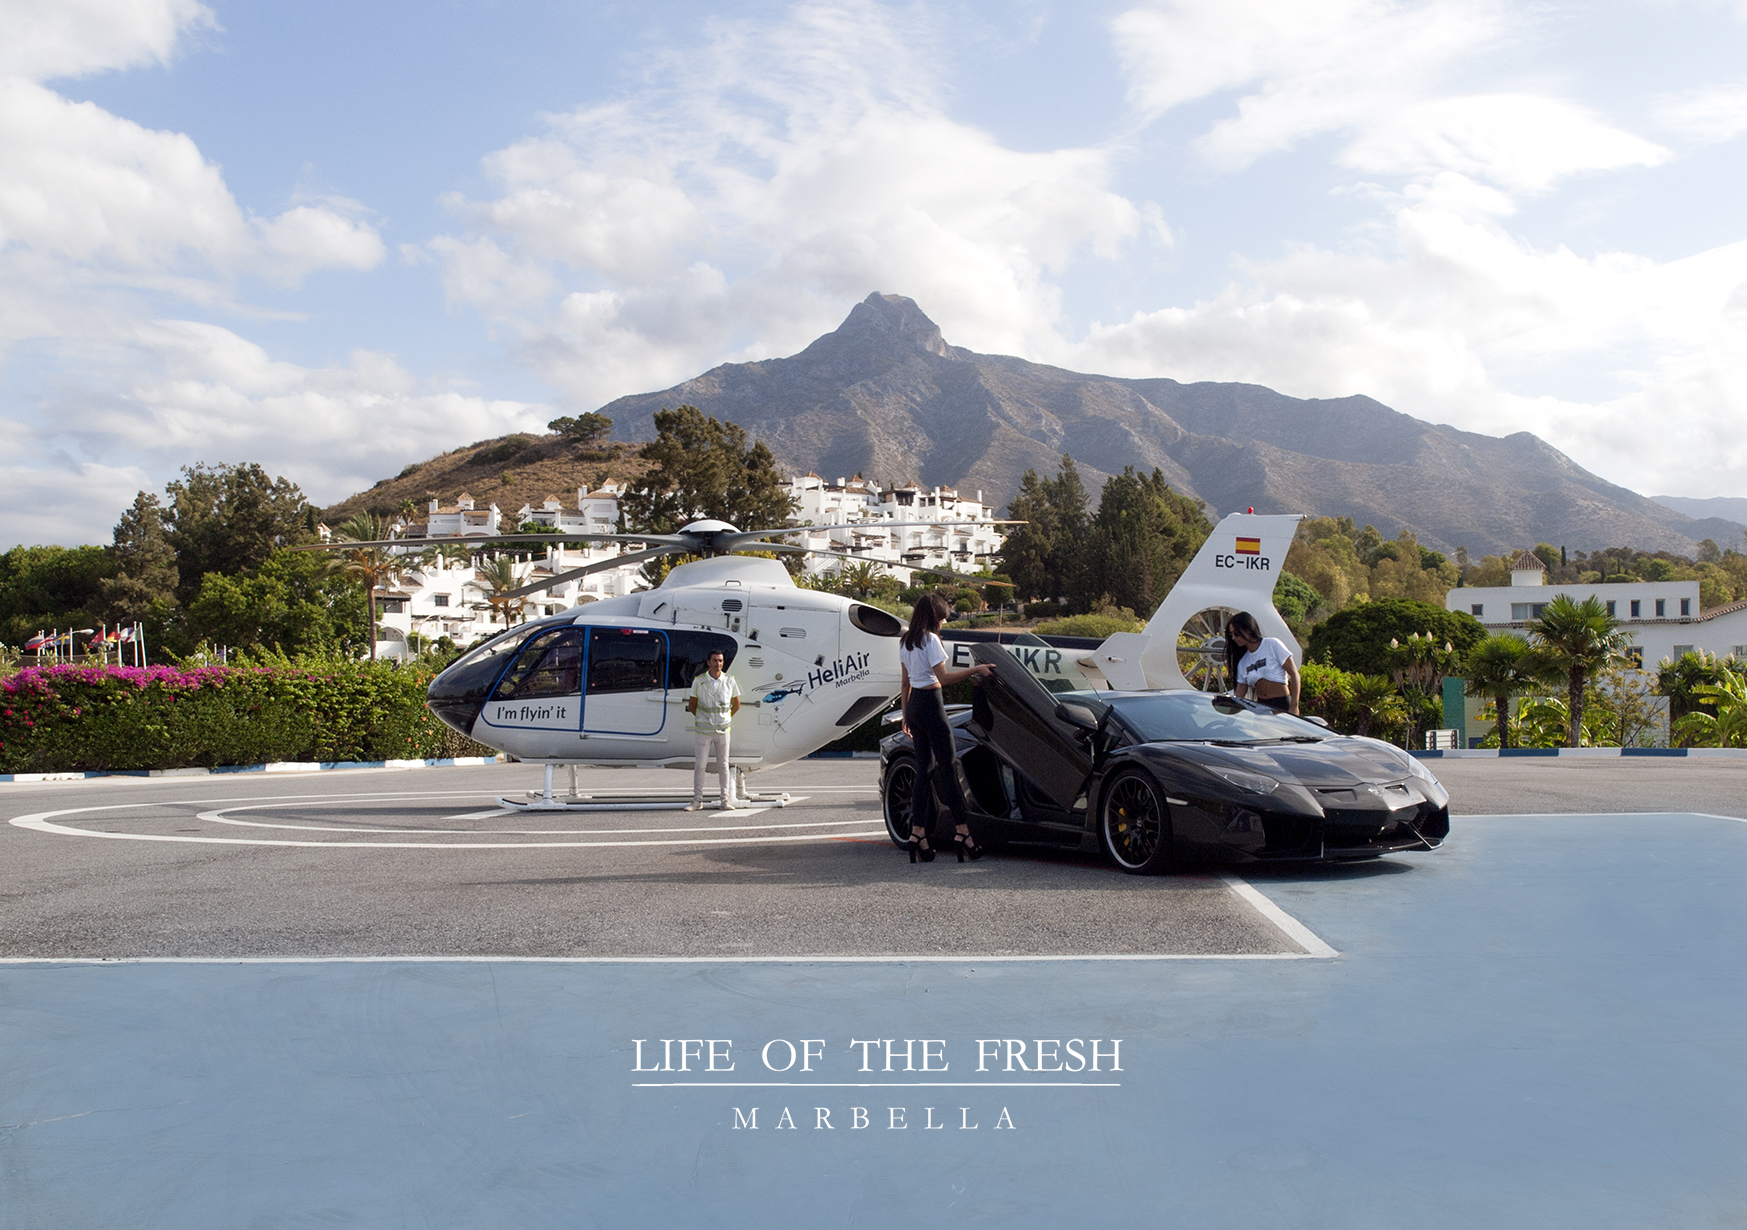 Marbella lifestyle